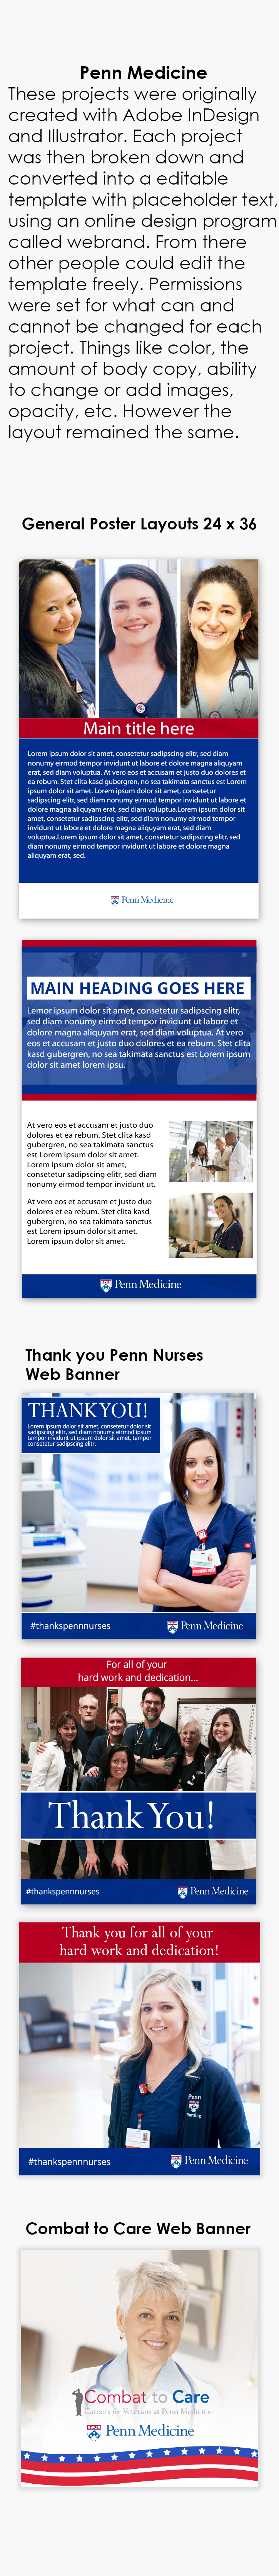 penn Penn Medicine graphic design  webrand Layout Design Adobe InDesign